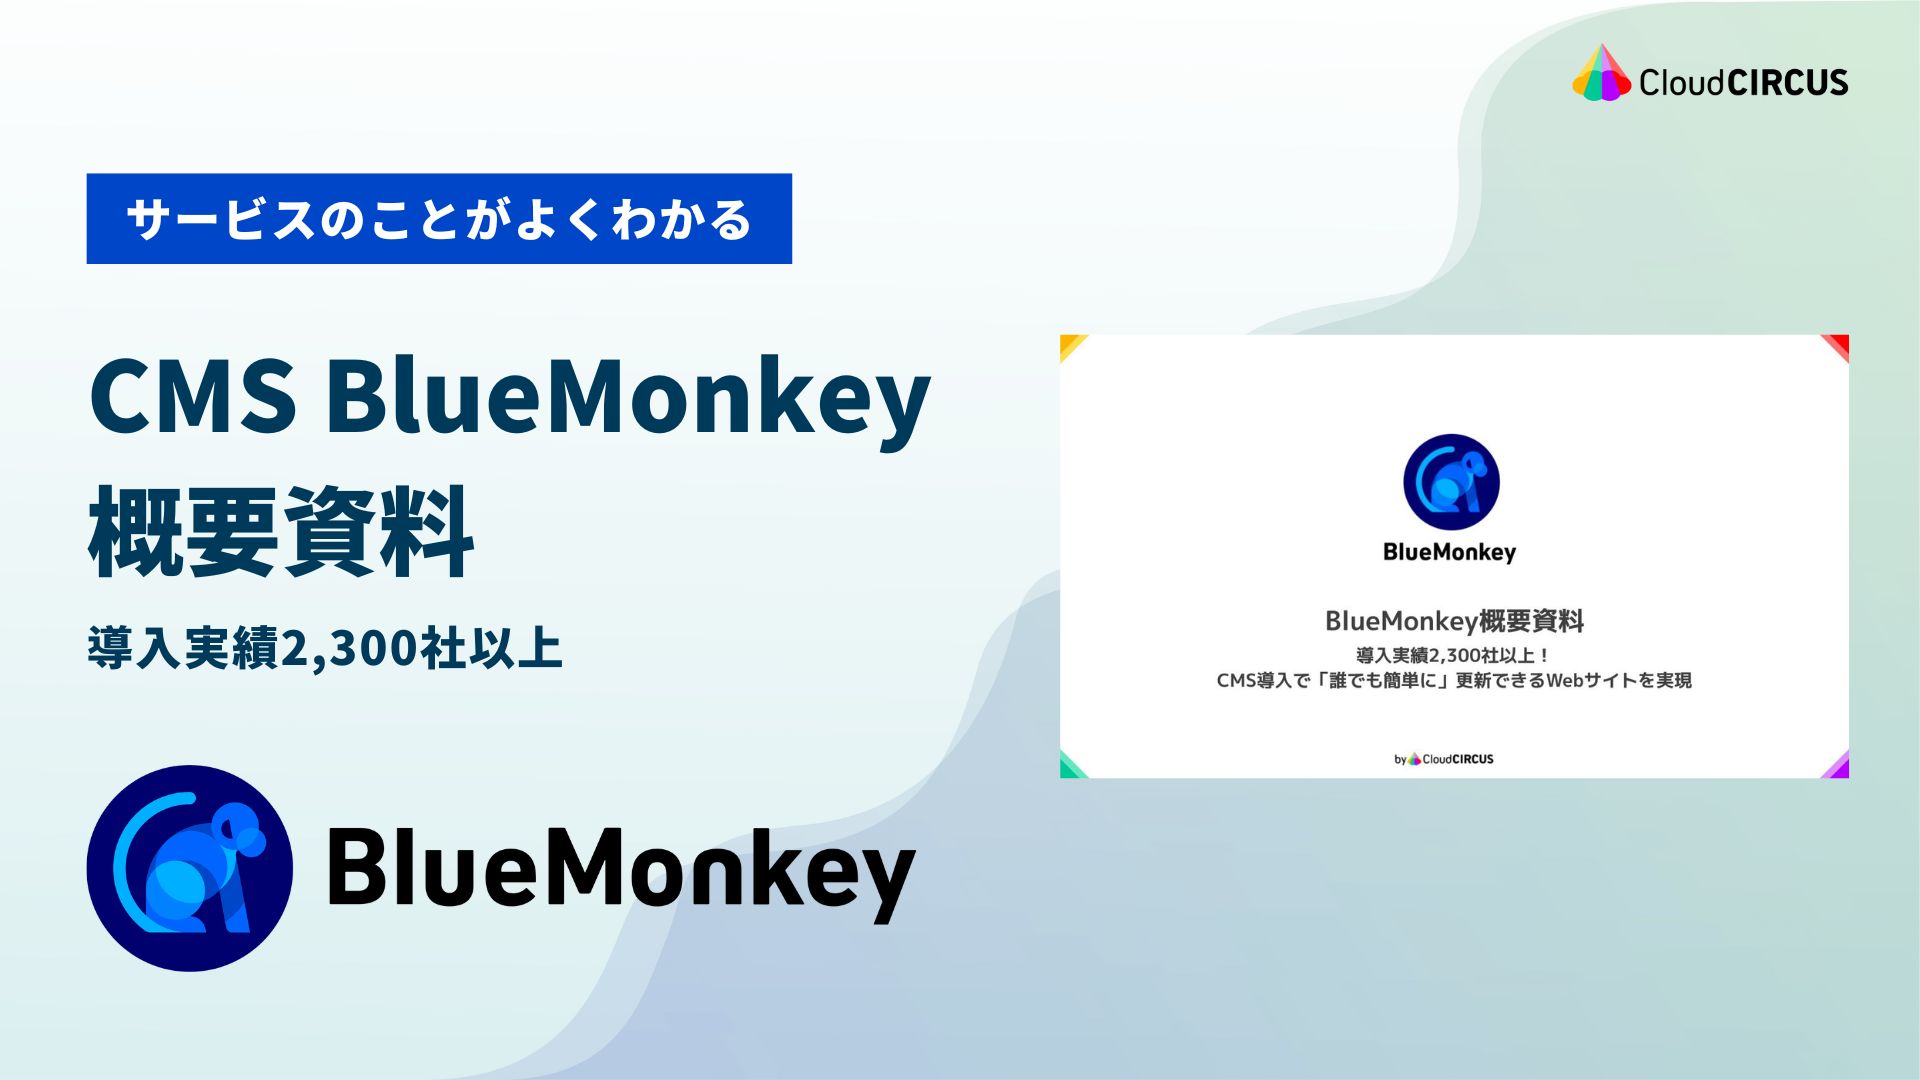 BlueMonkeyの概要資料をダウンロードできます。